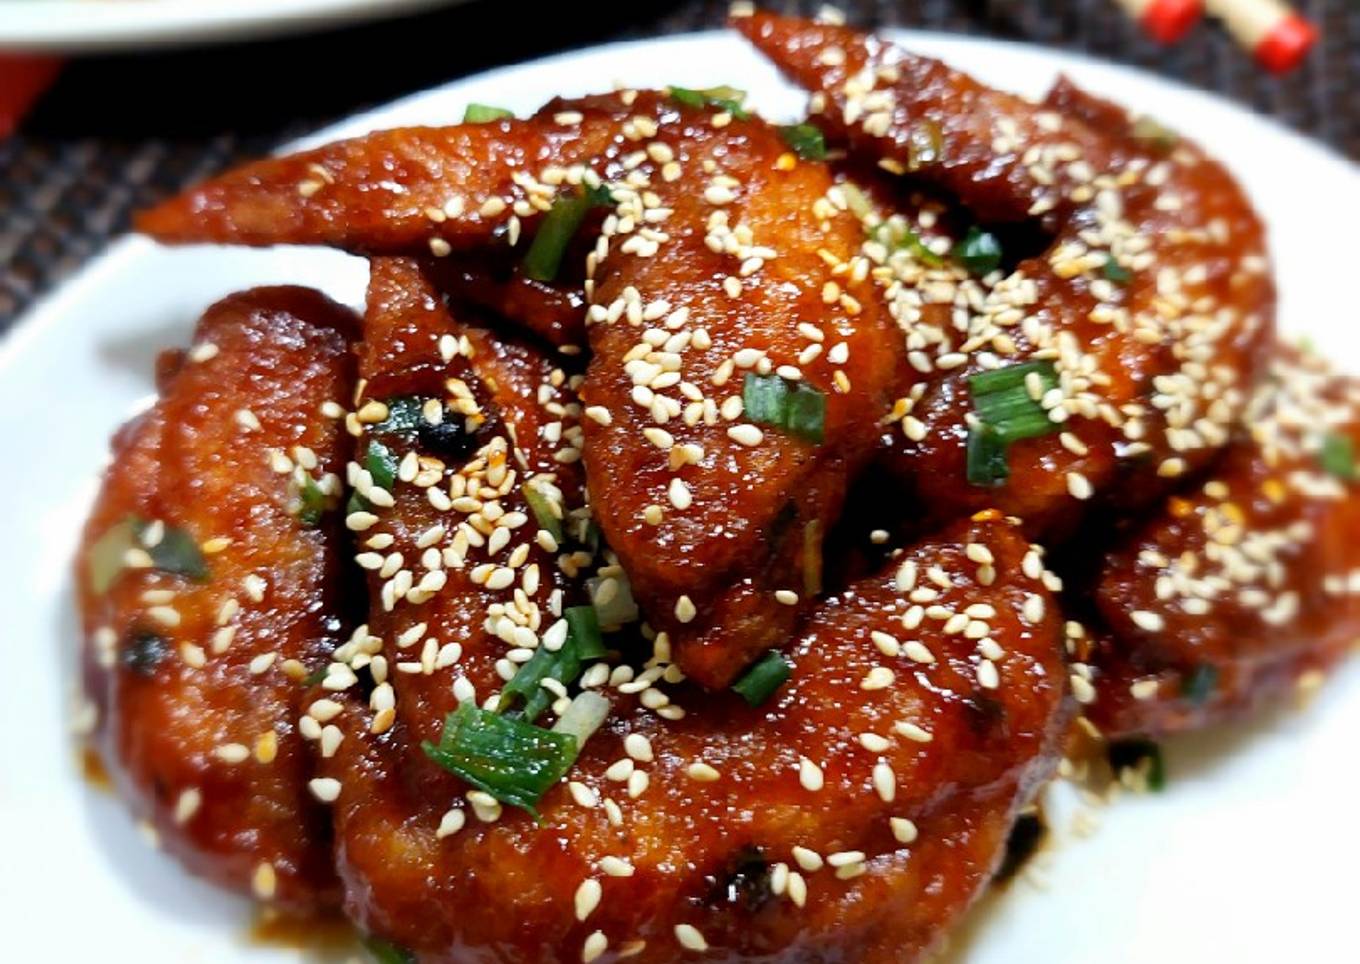 251. Korean Spicy Chicken Wings